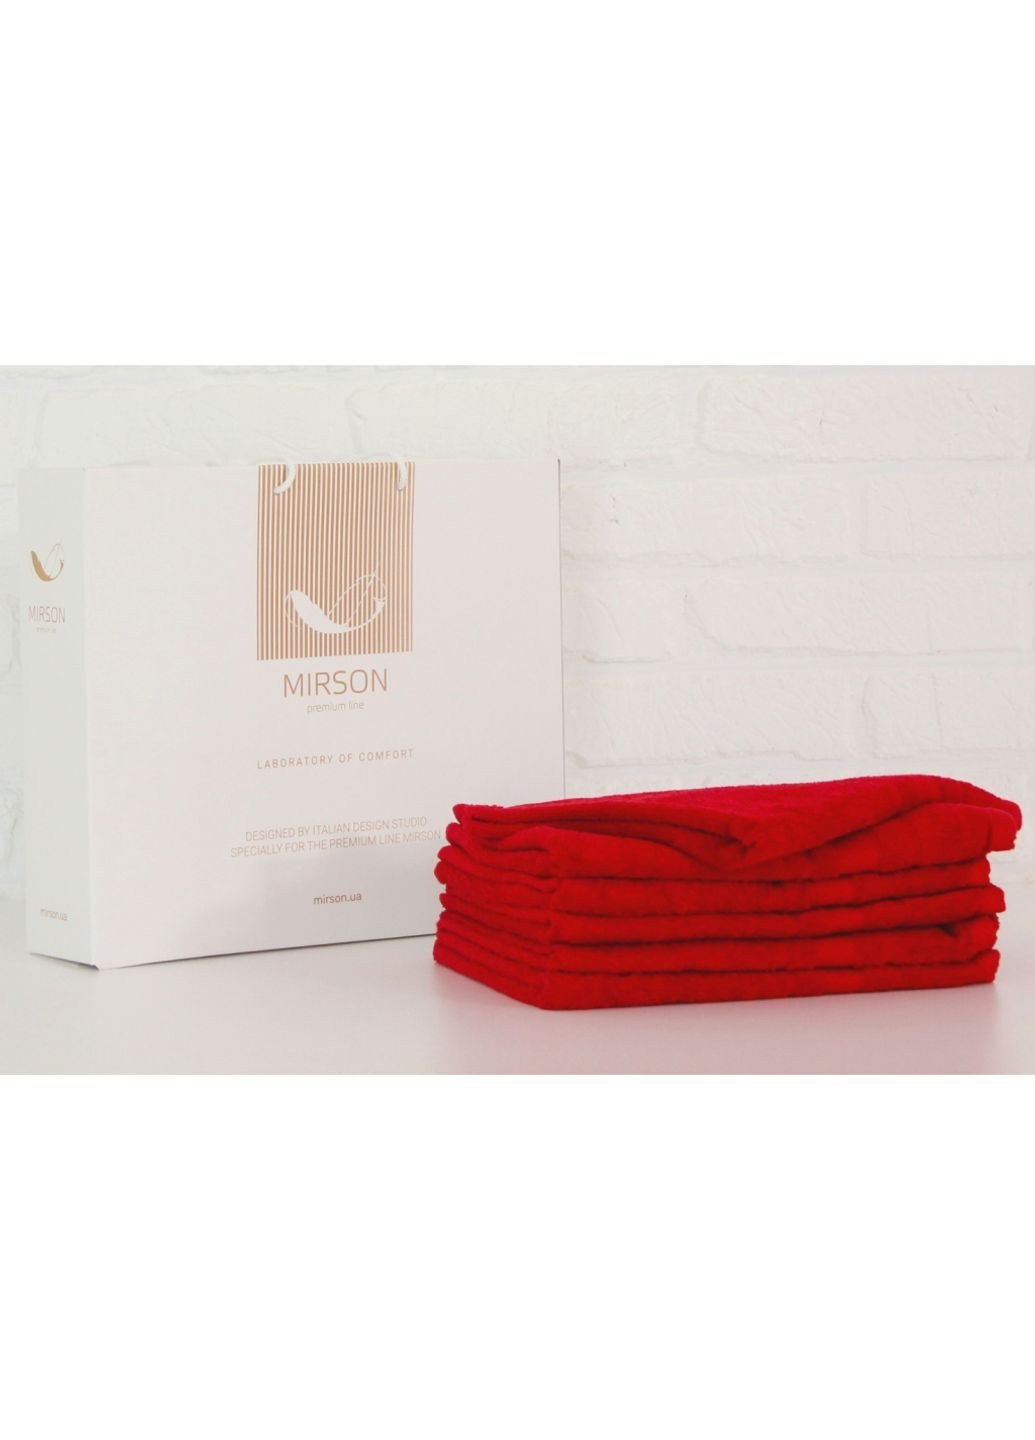 Mirson полотенце набор банный №5070 elite softness bordo 50х90 6 шт (2200003523942) красный производство - Украина